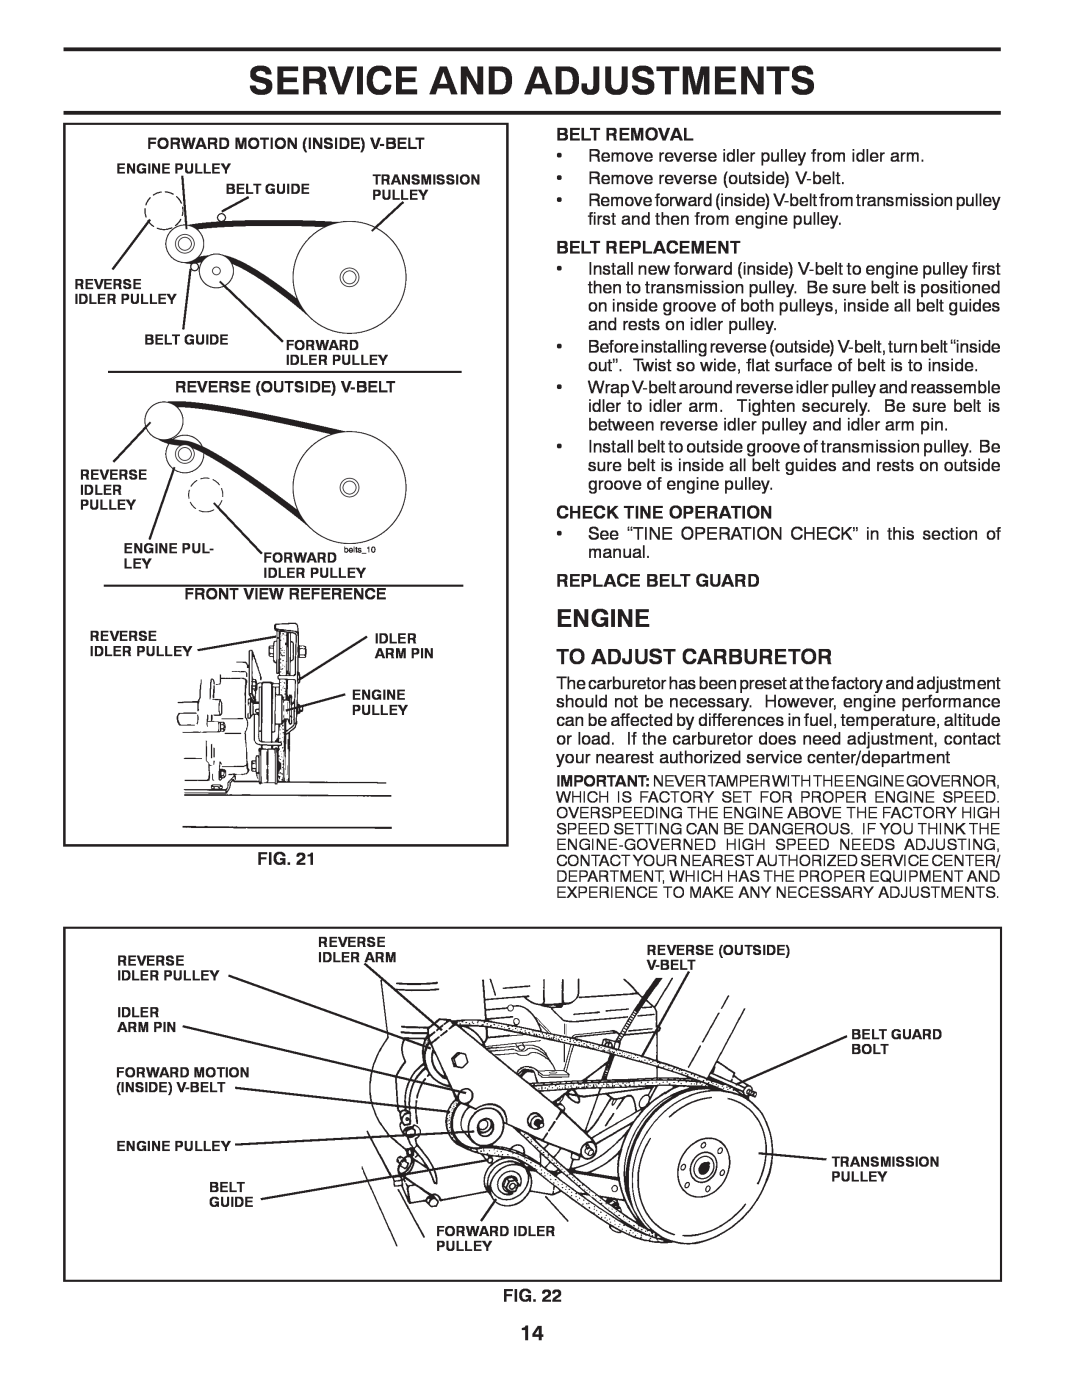 Poulan 413288 manual To Adjust Carburetor, Belt Removal, Belt Replacement, Check Tine Operation, Replace Belt Guard, Engine 